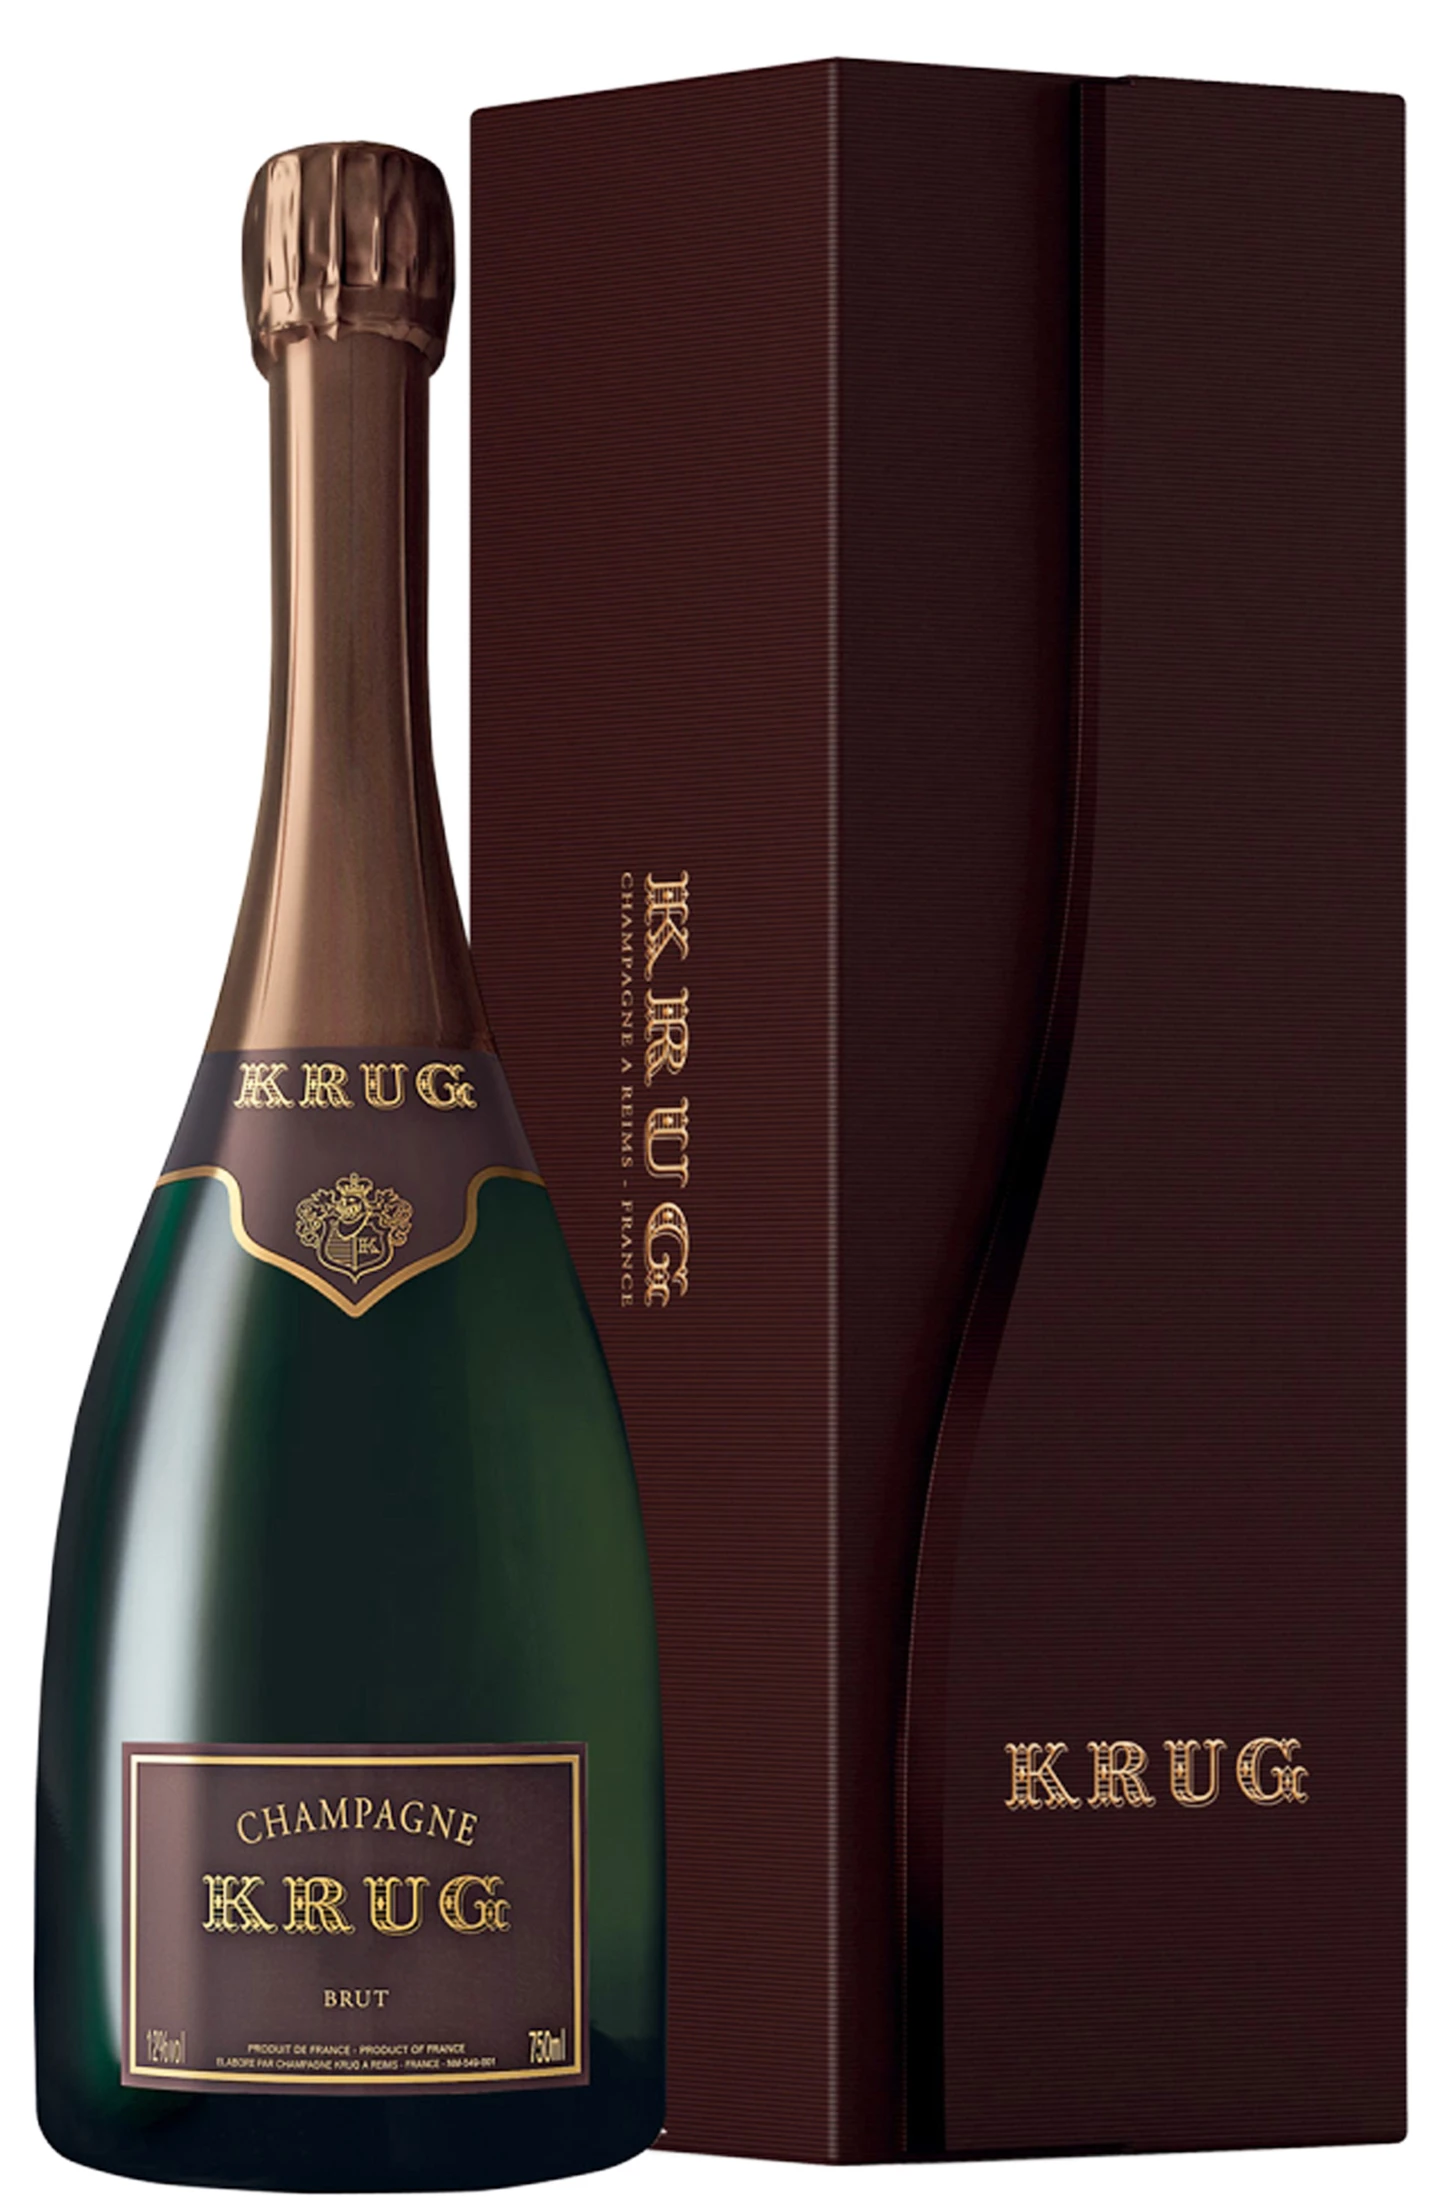 Løgismose Champagne Reims Krug Vintage Brut and giftbox 2003 - 208221